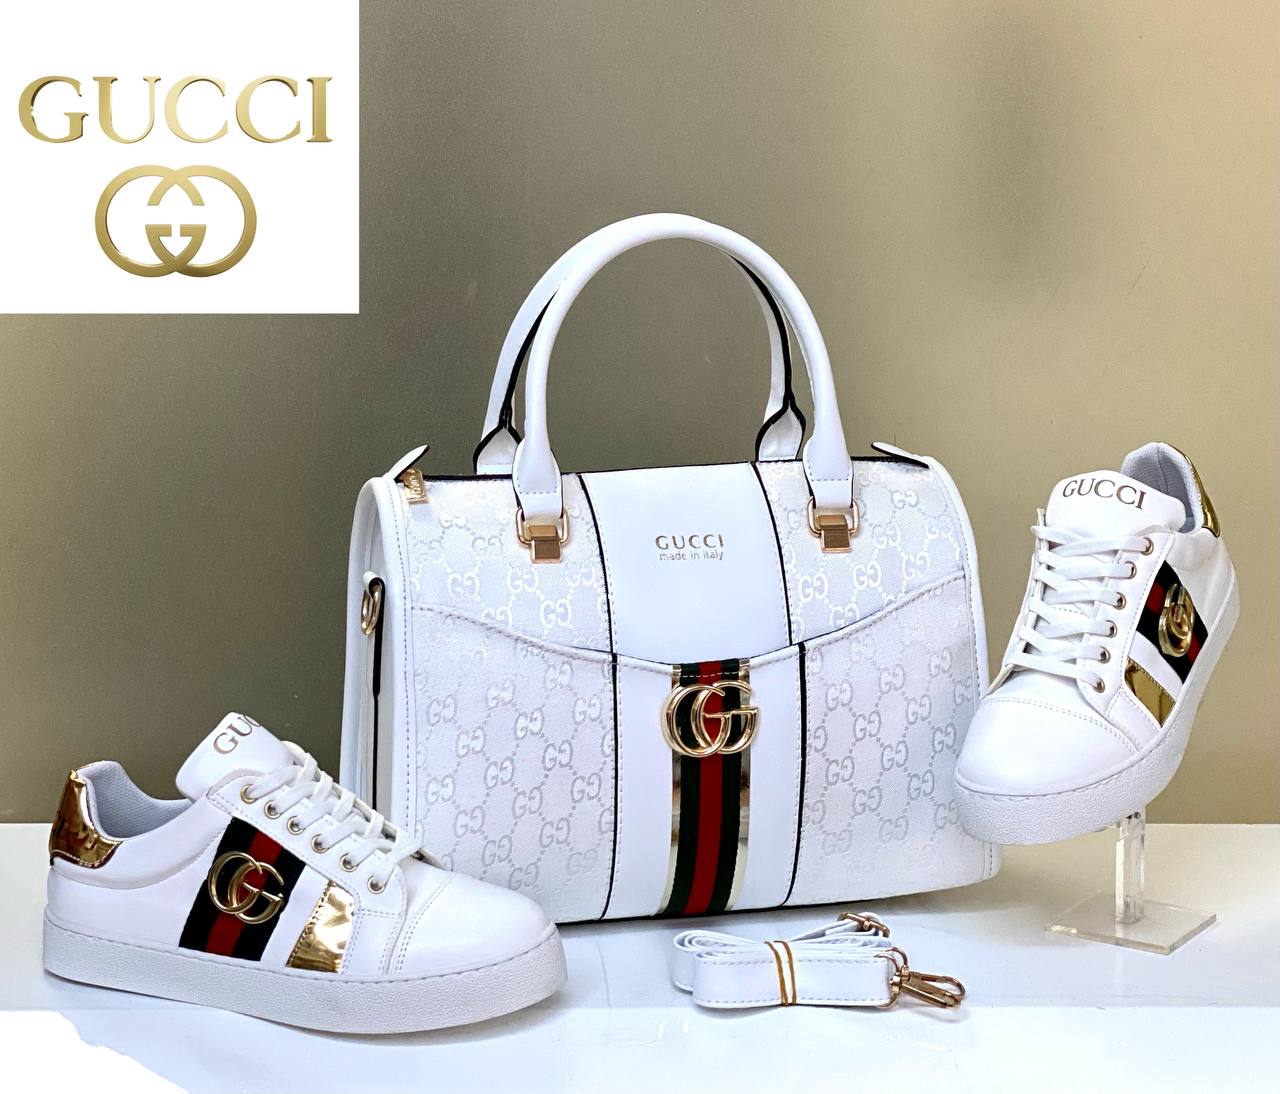 Gucci sneakers and handbag